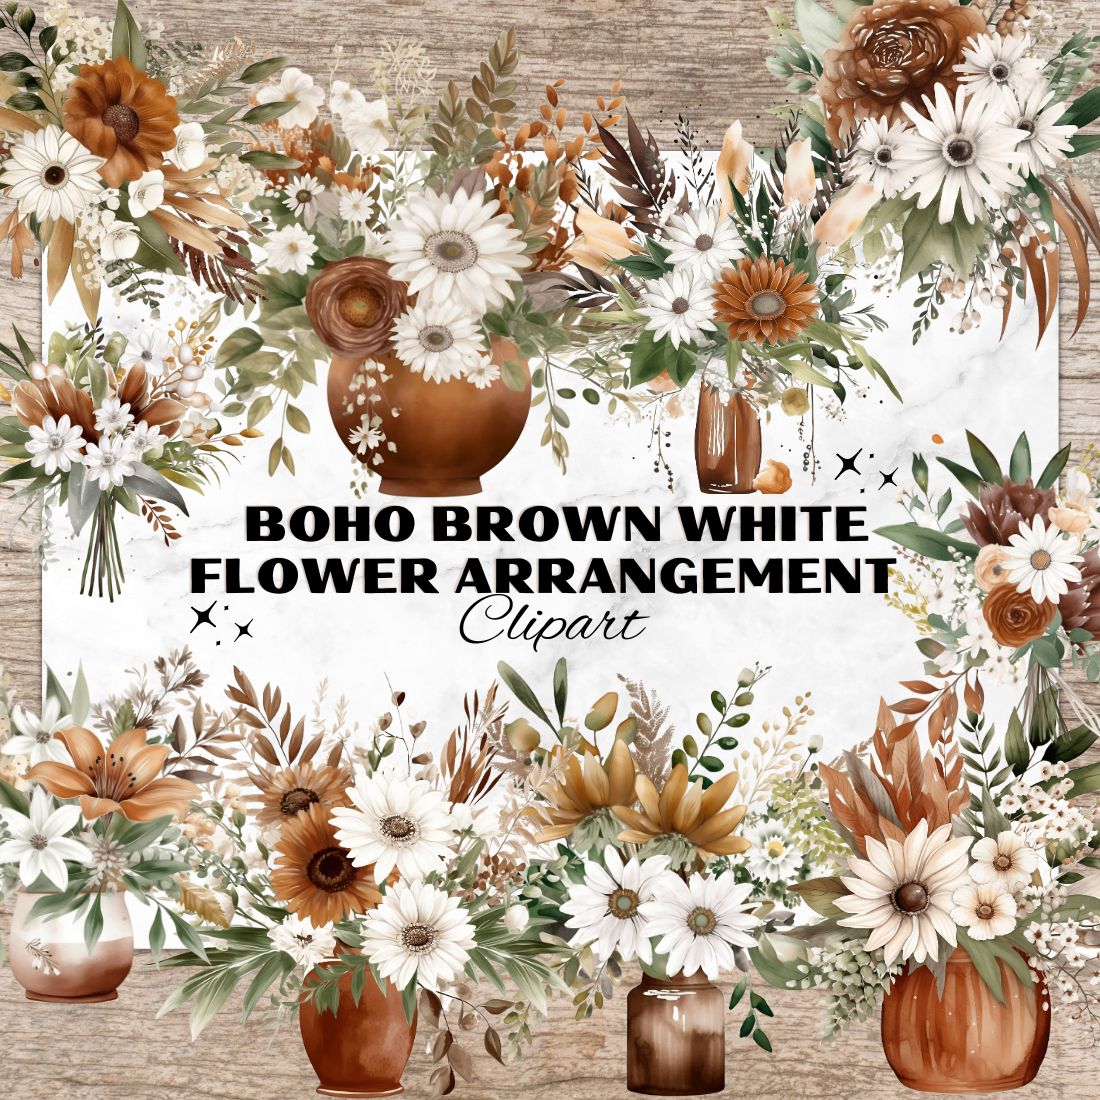 19 Boho Brown White Flower Arrangement PNG, Boho Flowers, Watercolor Clipart, Transparent PNG, Digital Paper Craft, Watercolor Clipart for Scrapbook, Invitation, Wall Art, T-Shirt Design cover image.